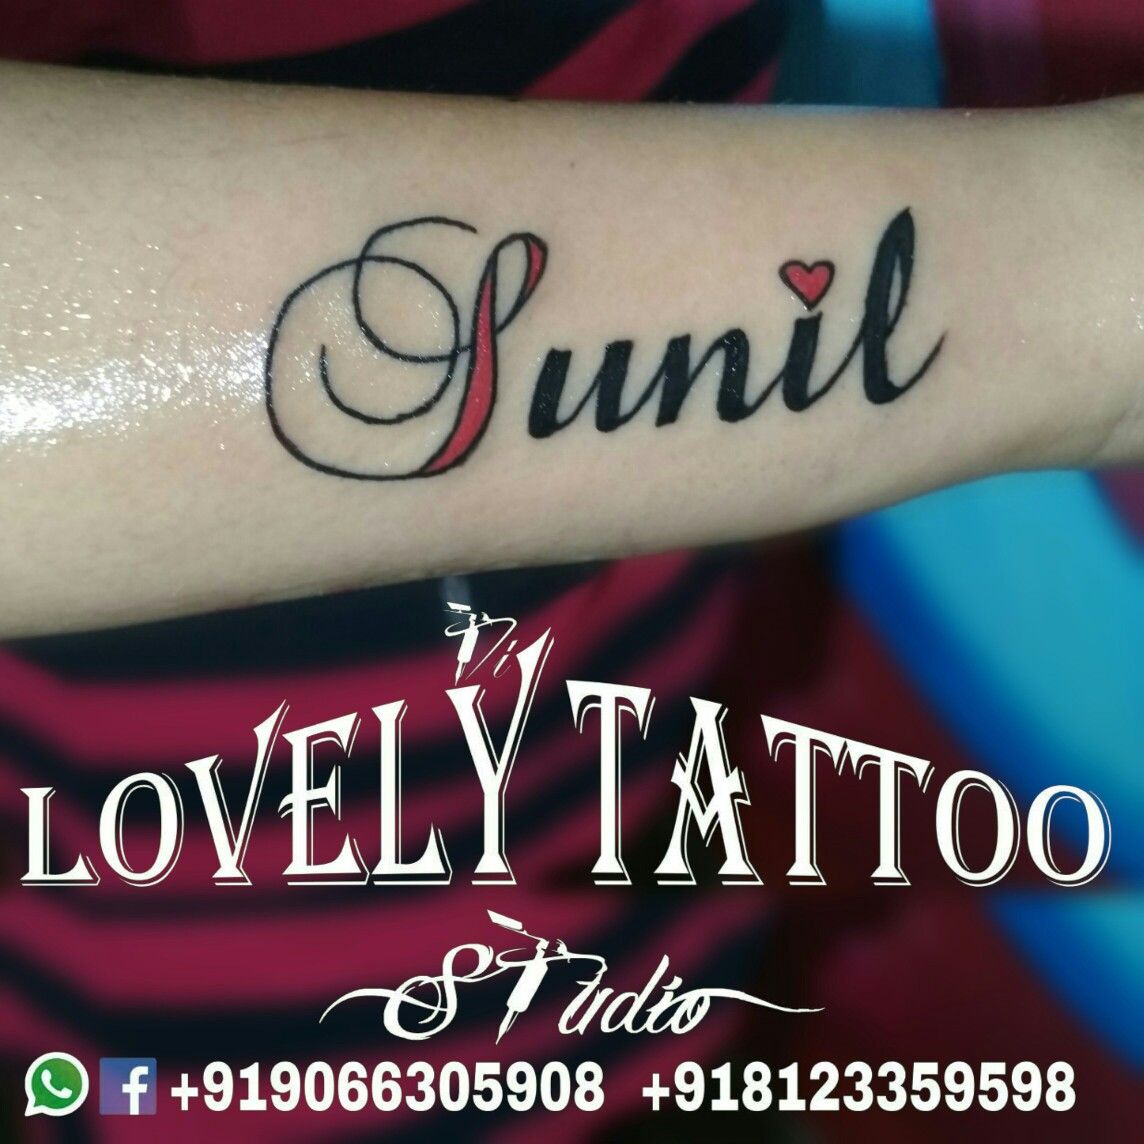 Sunil Name Tattoo On Hand - 1144x1144 Wallpaper 